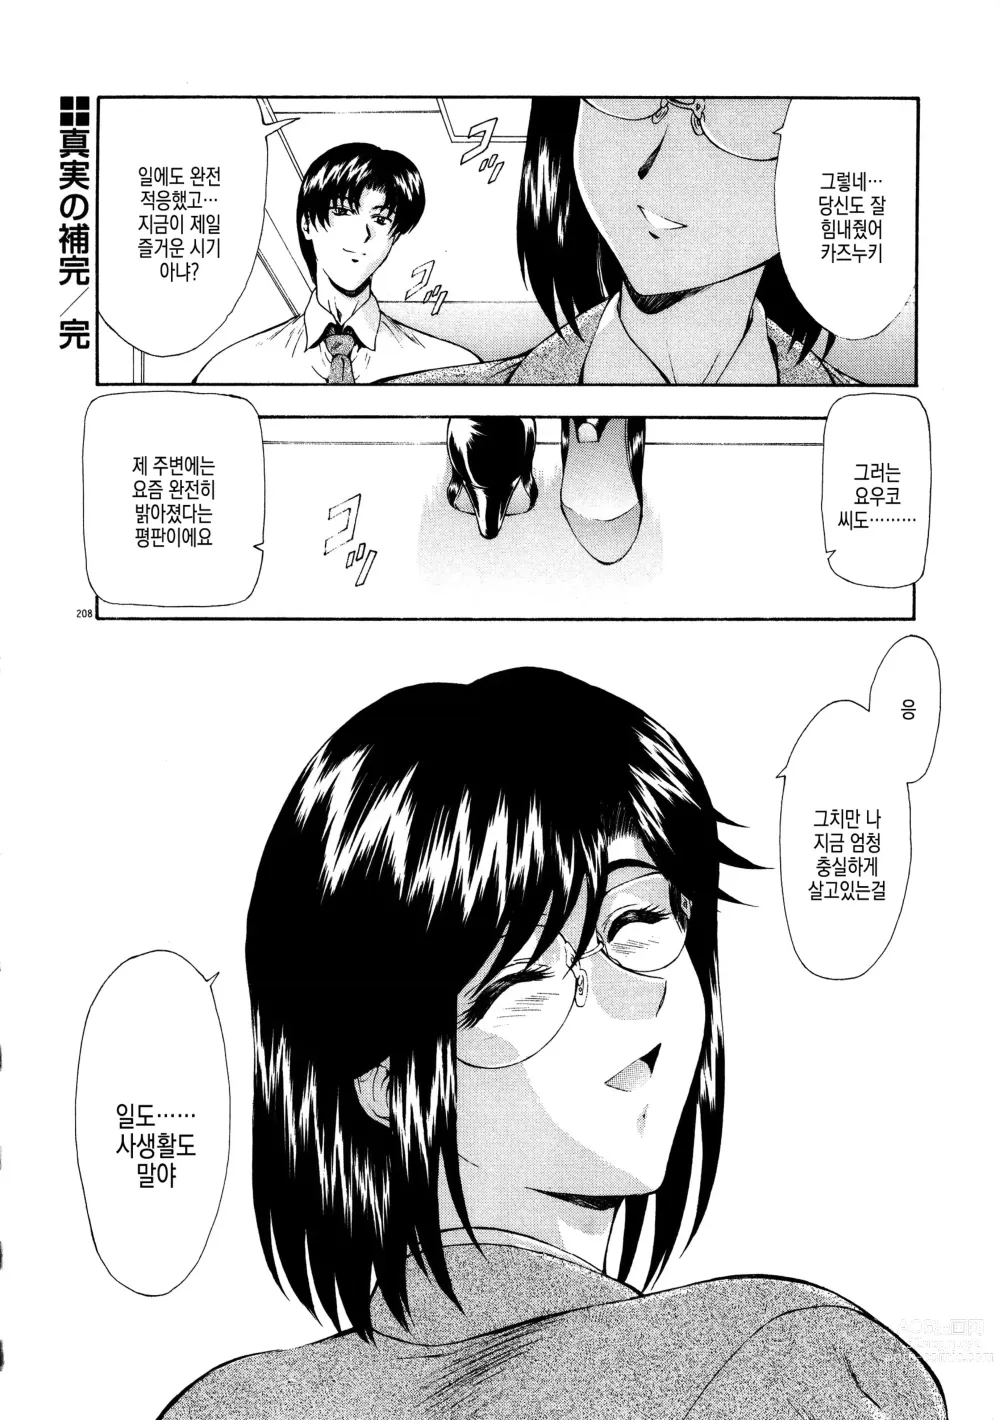 Page 146 of manga 진실의 보완 ch.4 ~ ch.10